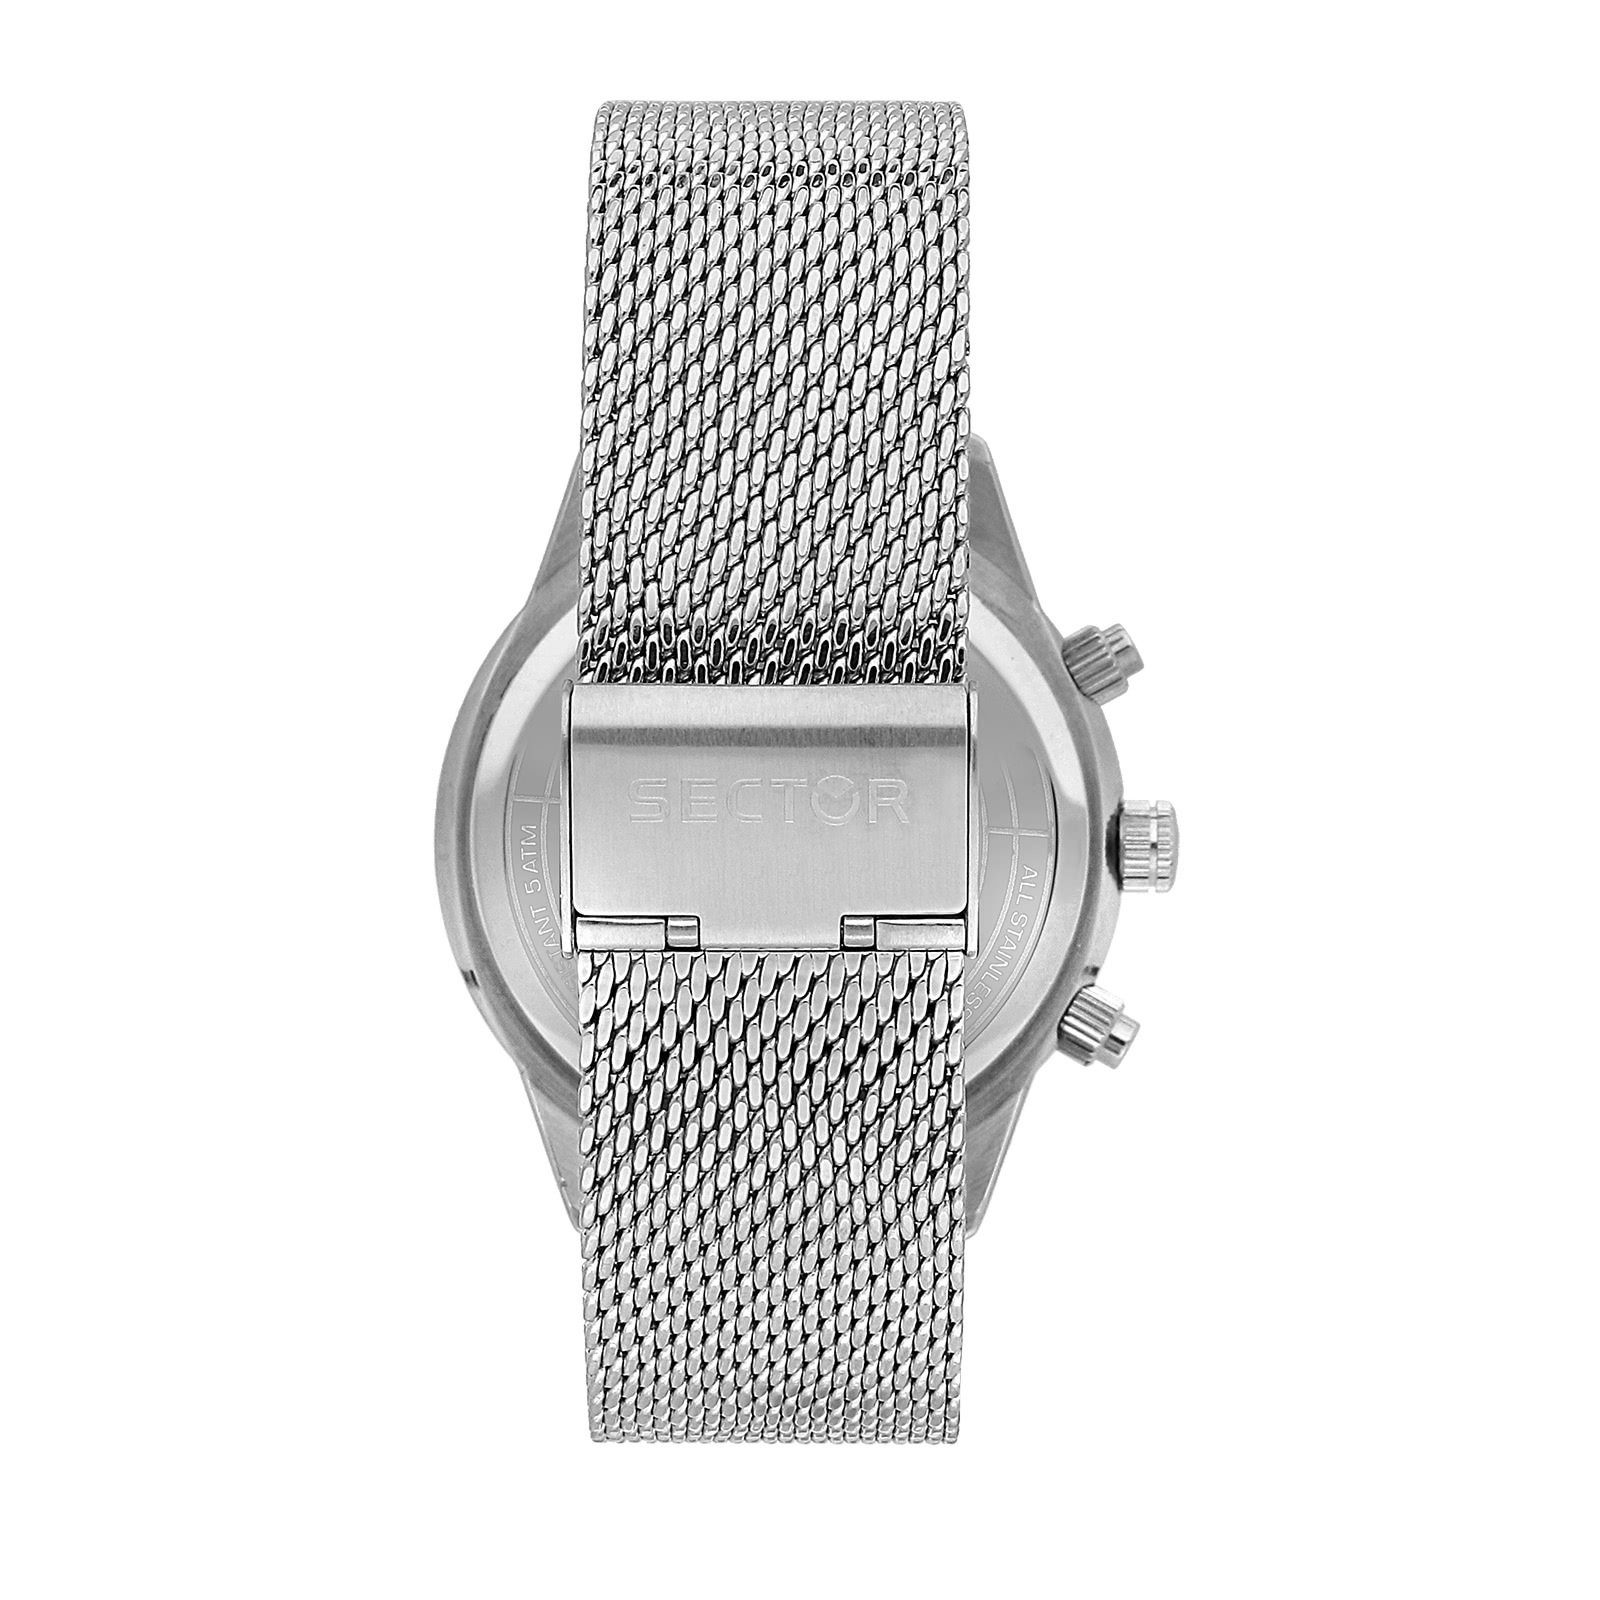 silber, Herren Herren (43mm), groß Armbanduhr Fashion Multifunkt, Armbanduhr Edelstahlarmband Sector Sector Multifunktionsuhr rund,